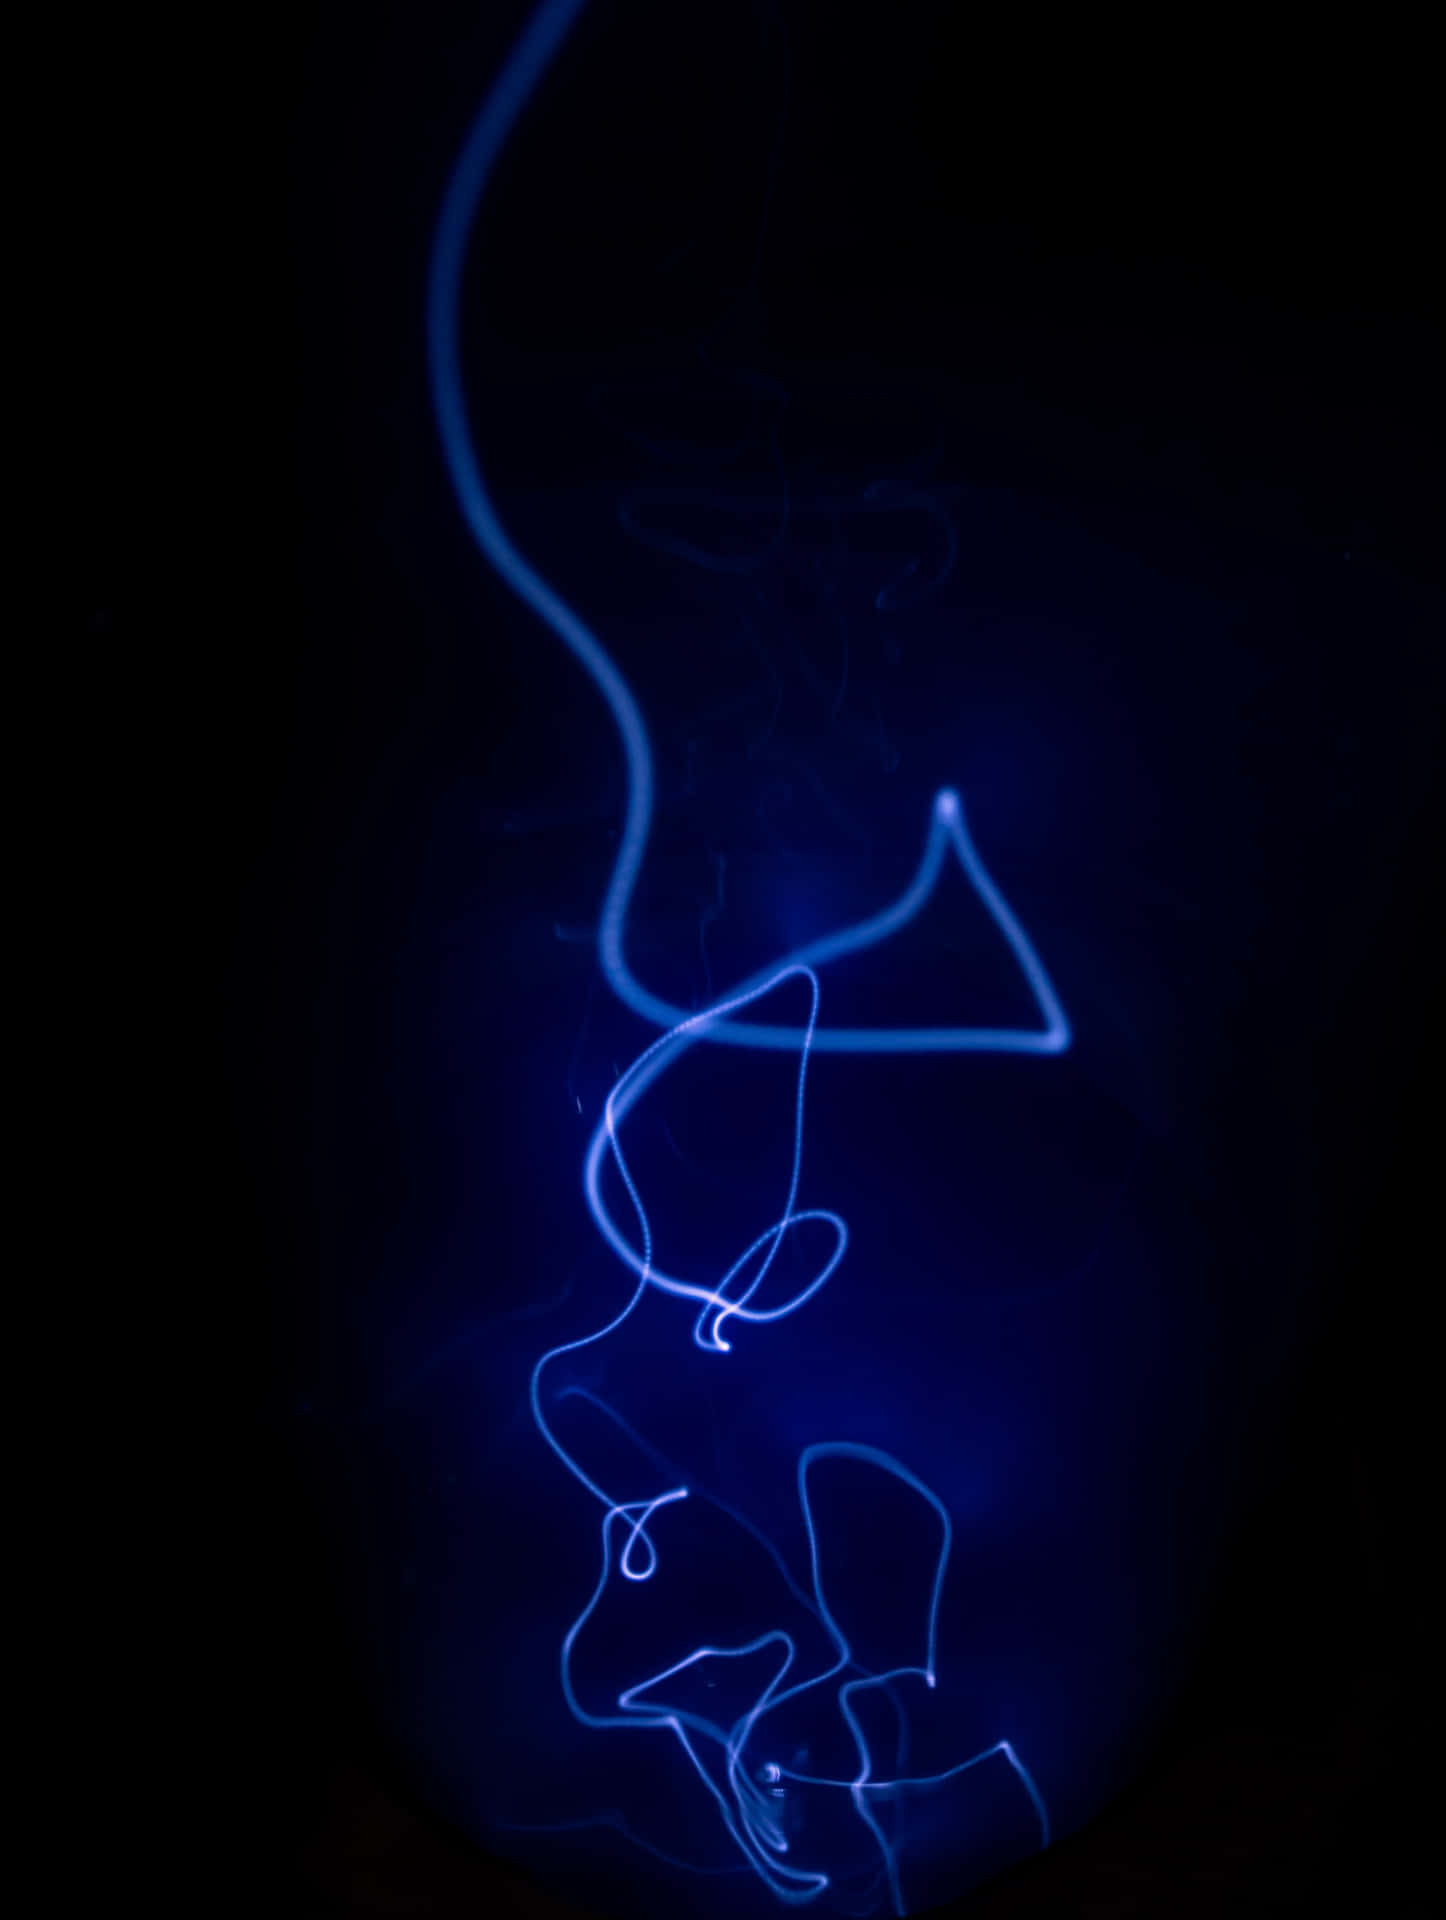 Enblå Ljusritning Av En Hund I Ett Mörkt Rum